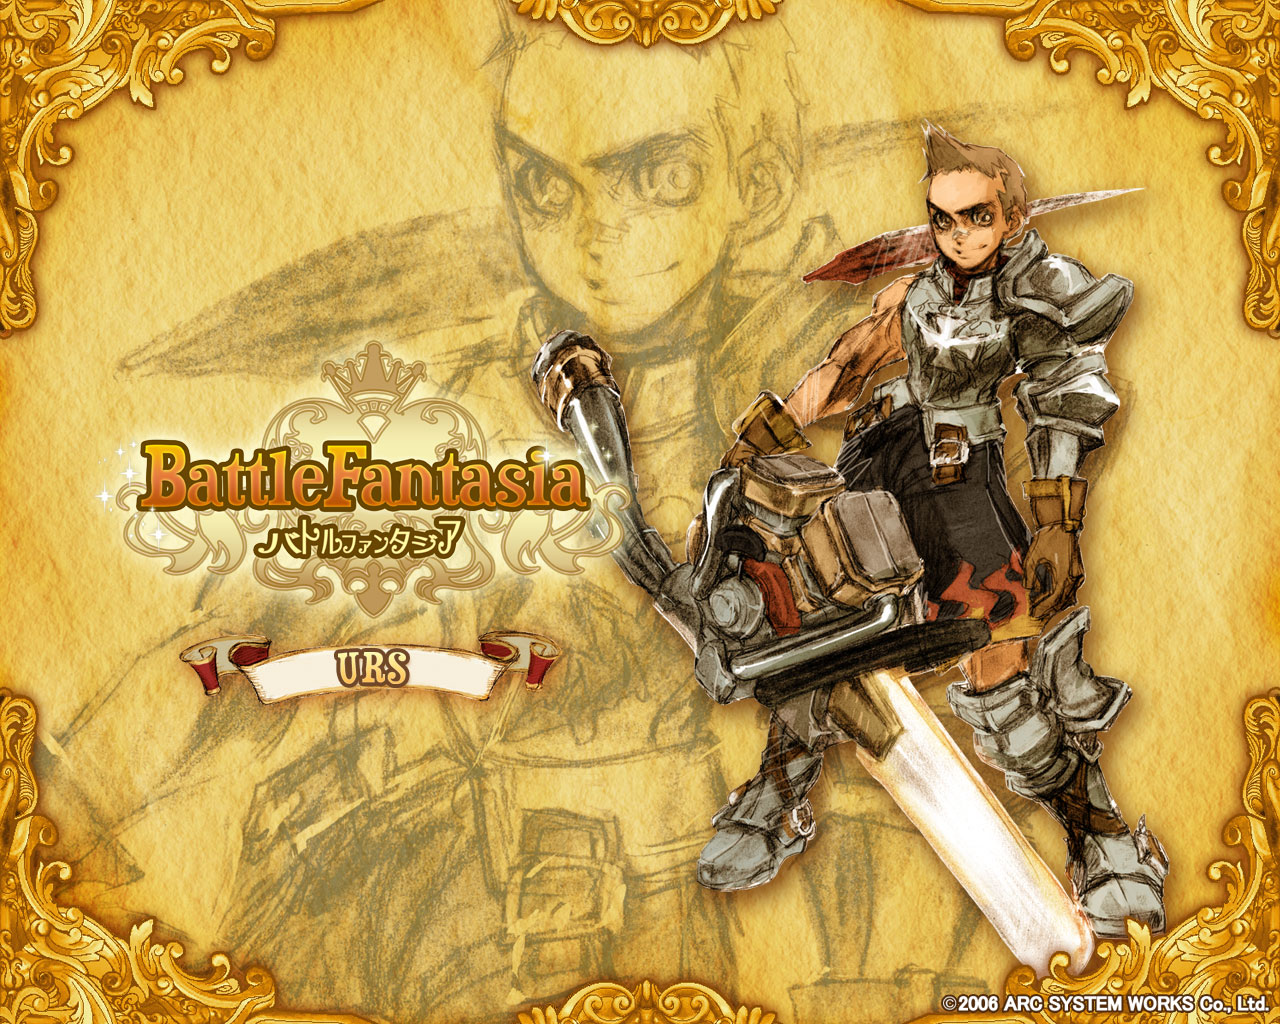 Battle Fantasia -Revised Edition- HD wallpapers, Desktop wallpaper - most viewed